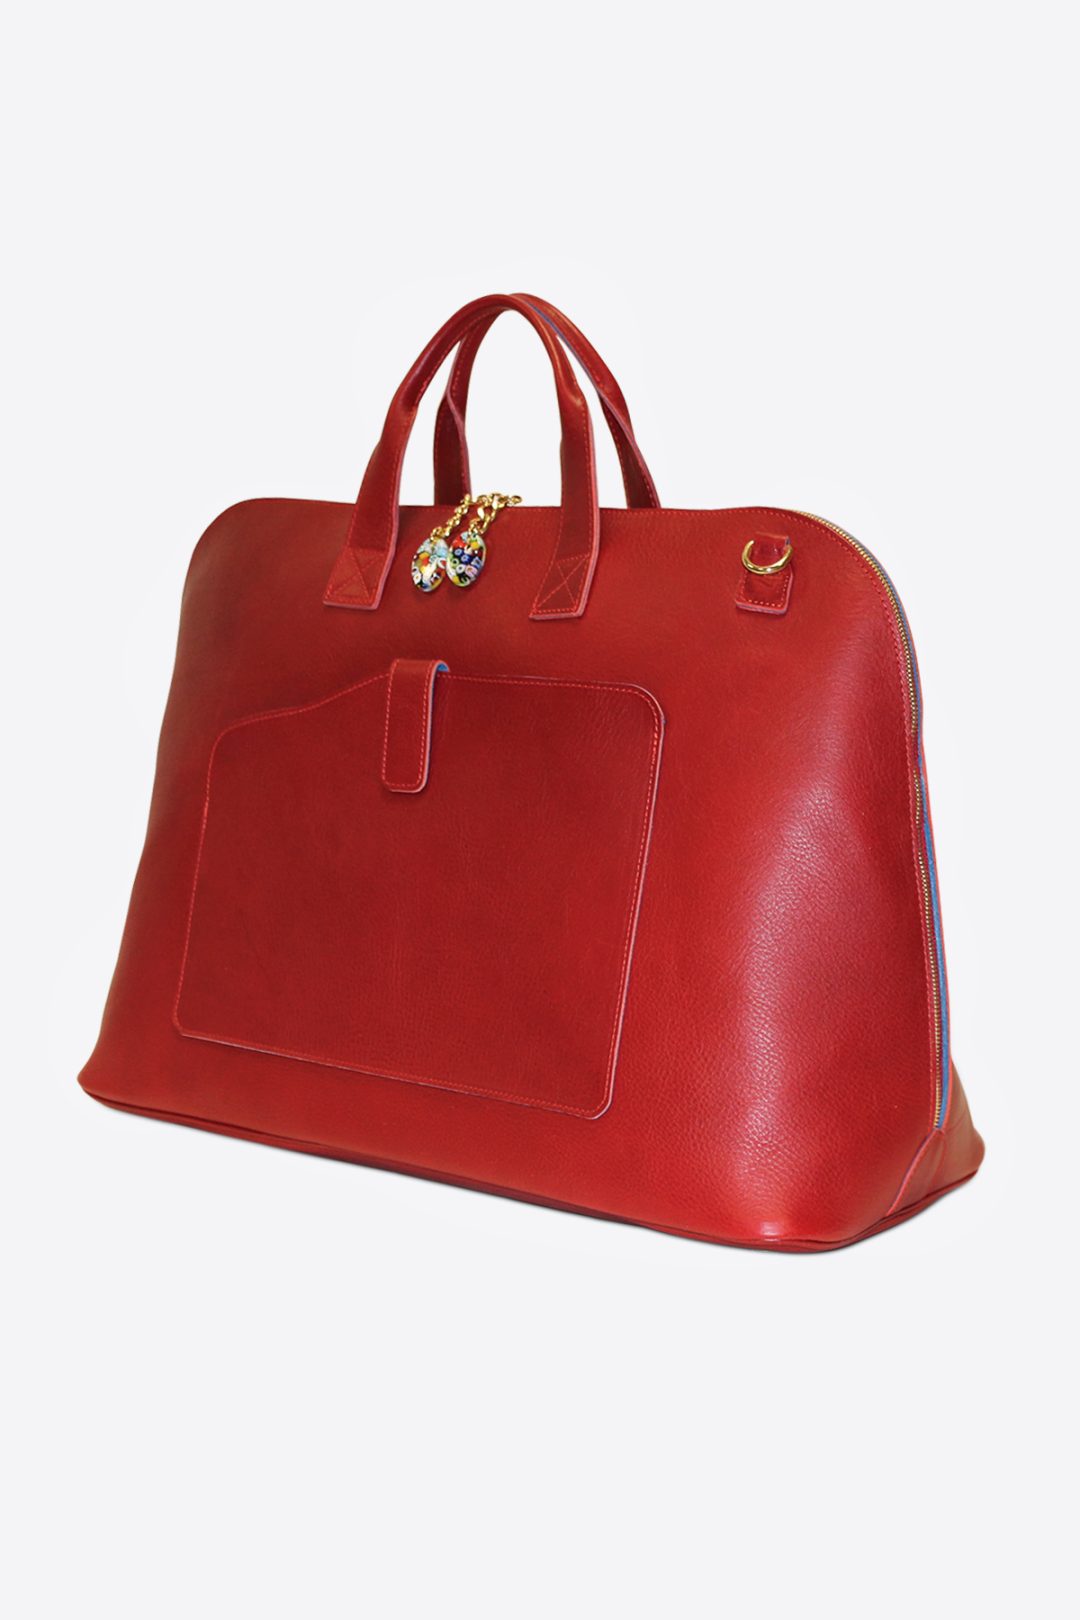 Classic Sport Bag Terrida - Handmade in Italy, waterproof leather